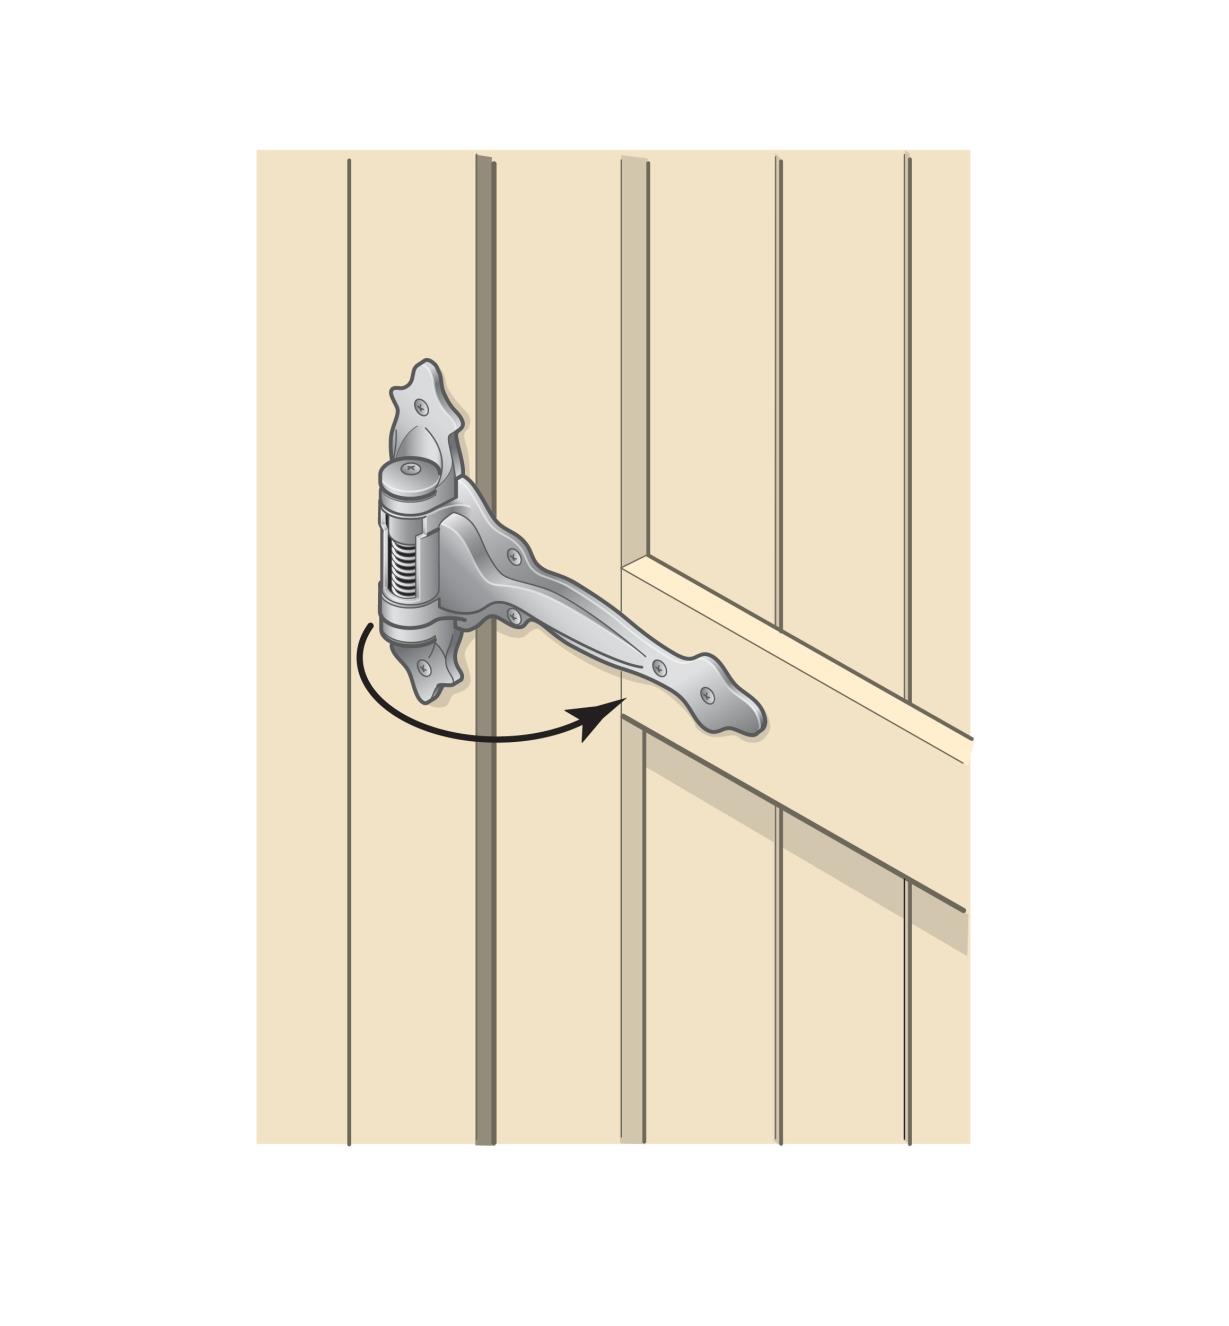 Illustration of 9" Tee Hinge mounted on a gate